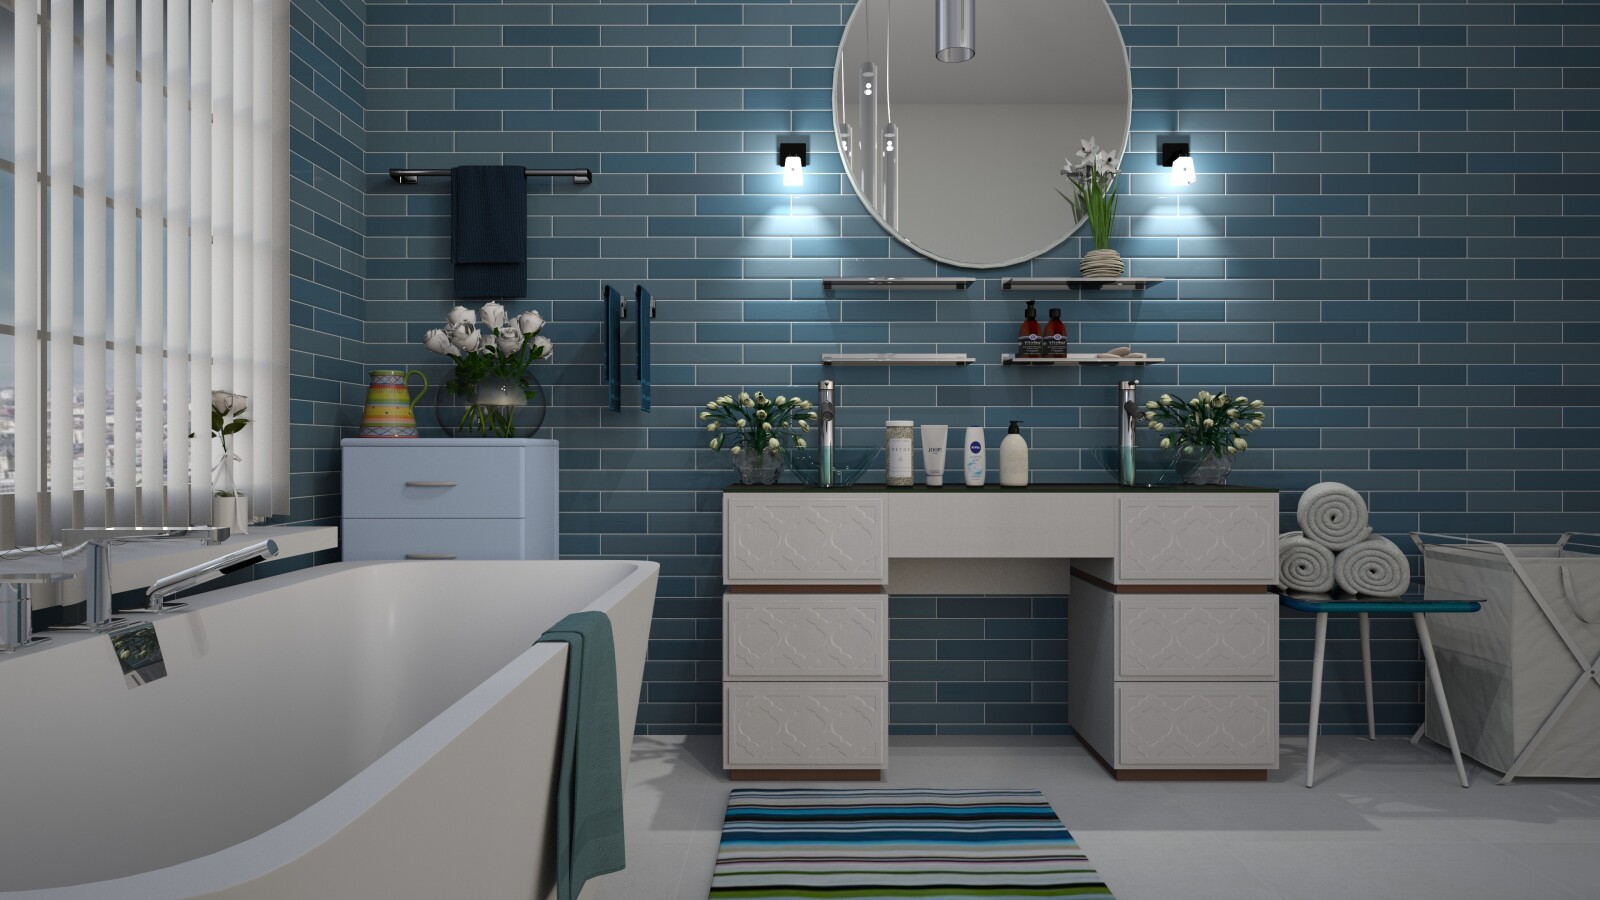 Bathroom Recessed Lighting Tips to Brighten Up Your Space